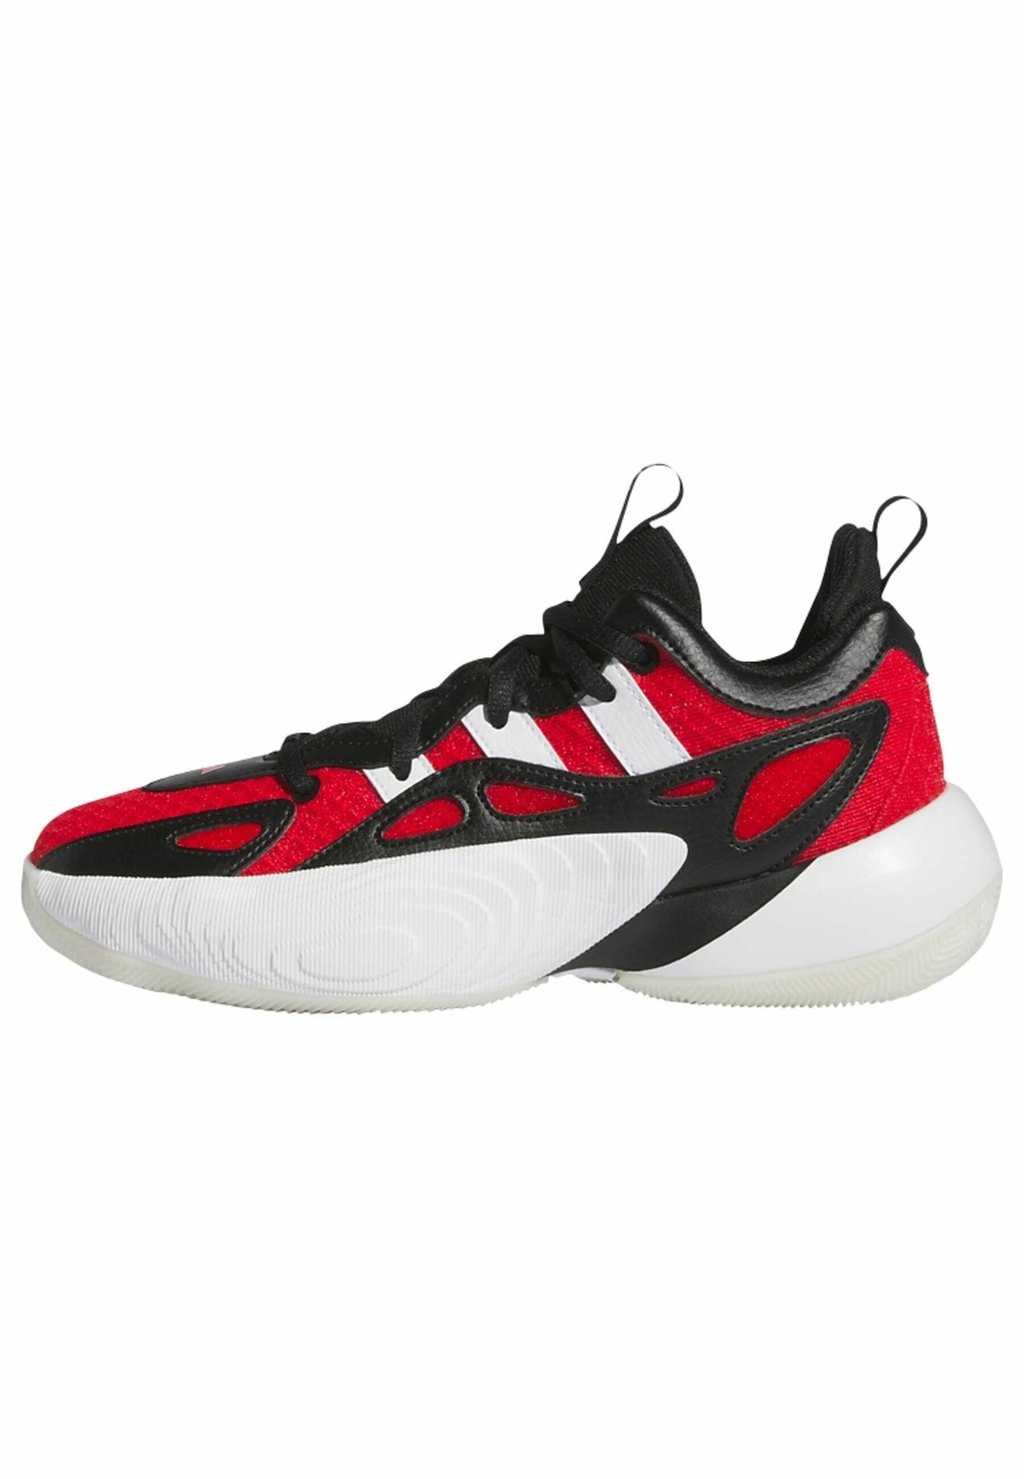 Баскетбольные кроссовки TRAE UNLIMITED adidas Performance, цвет vivid red cloud white core black олимпийка he9307 adidas b3sfzhd vivid red 128